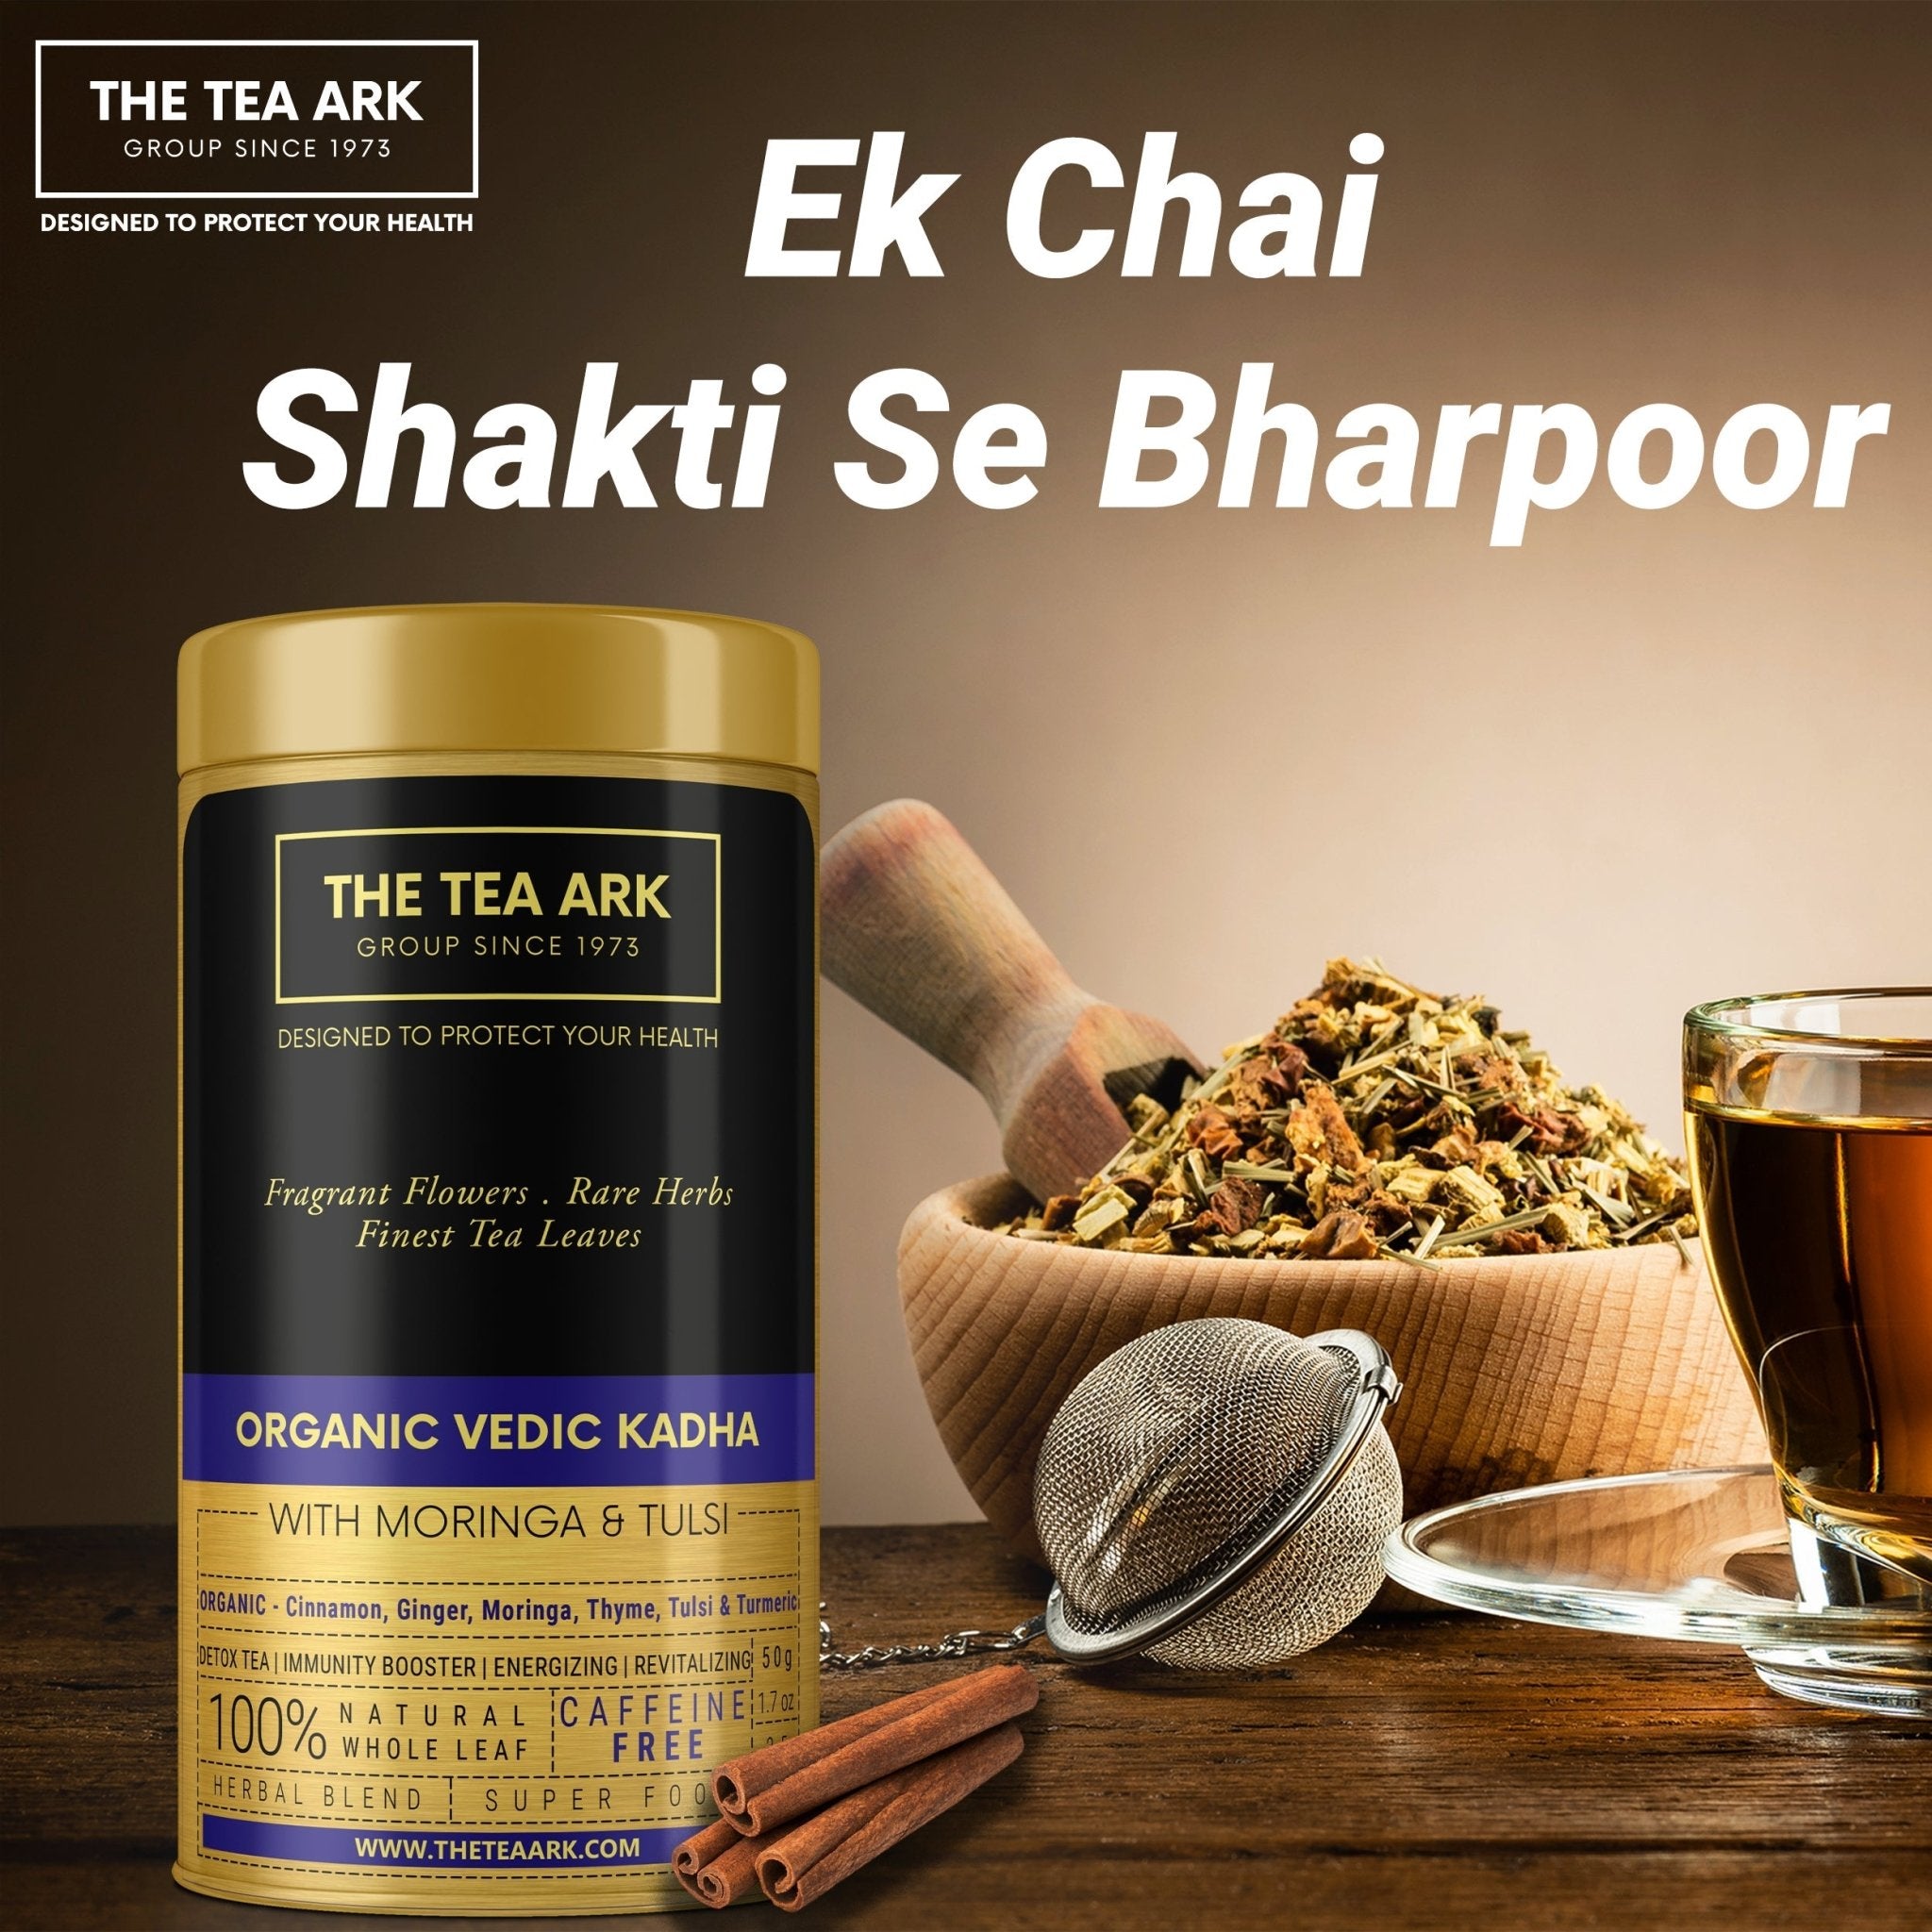 The Tea Ark Vedic Kadha Detox Tea with Moringa & Tulsi, Immunity Booster - Inlife Pharma Private Limited